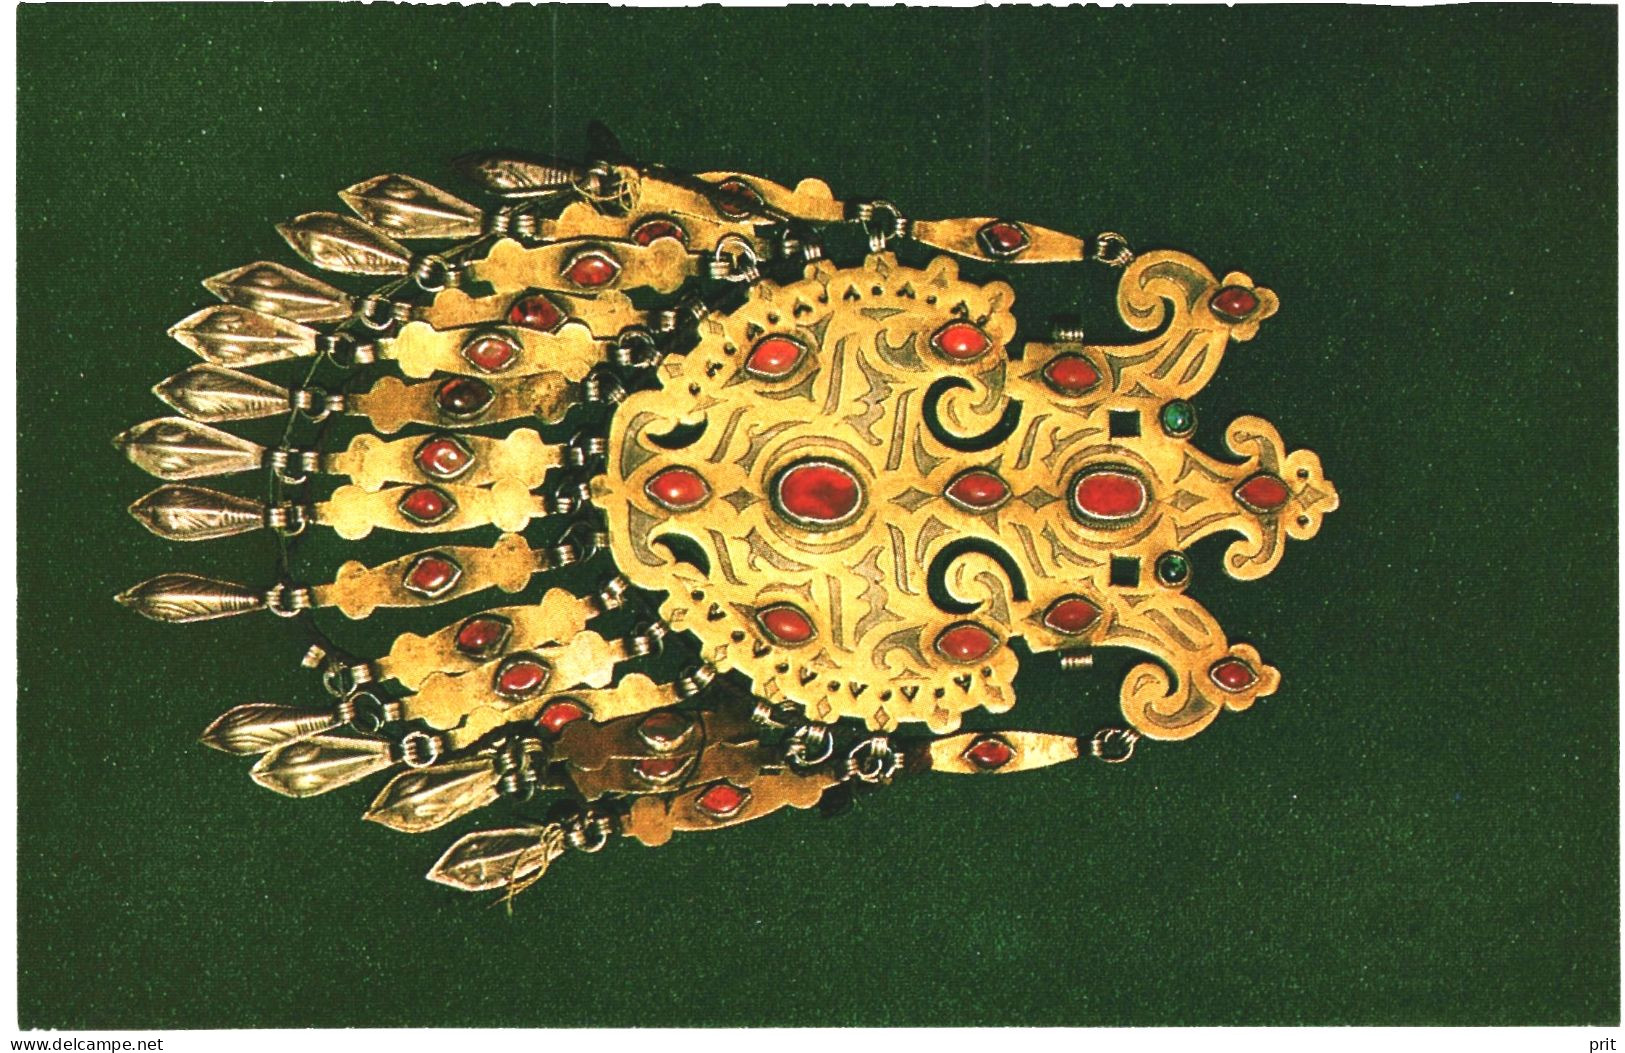 Turkmen Silverware antique jewelry Unused 16 Postcards Set, Soviet Turkmenistan USSR 1975 Publisher Aurora, Leningrad